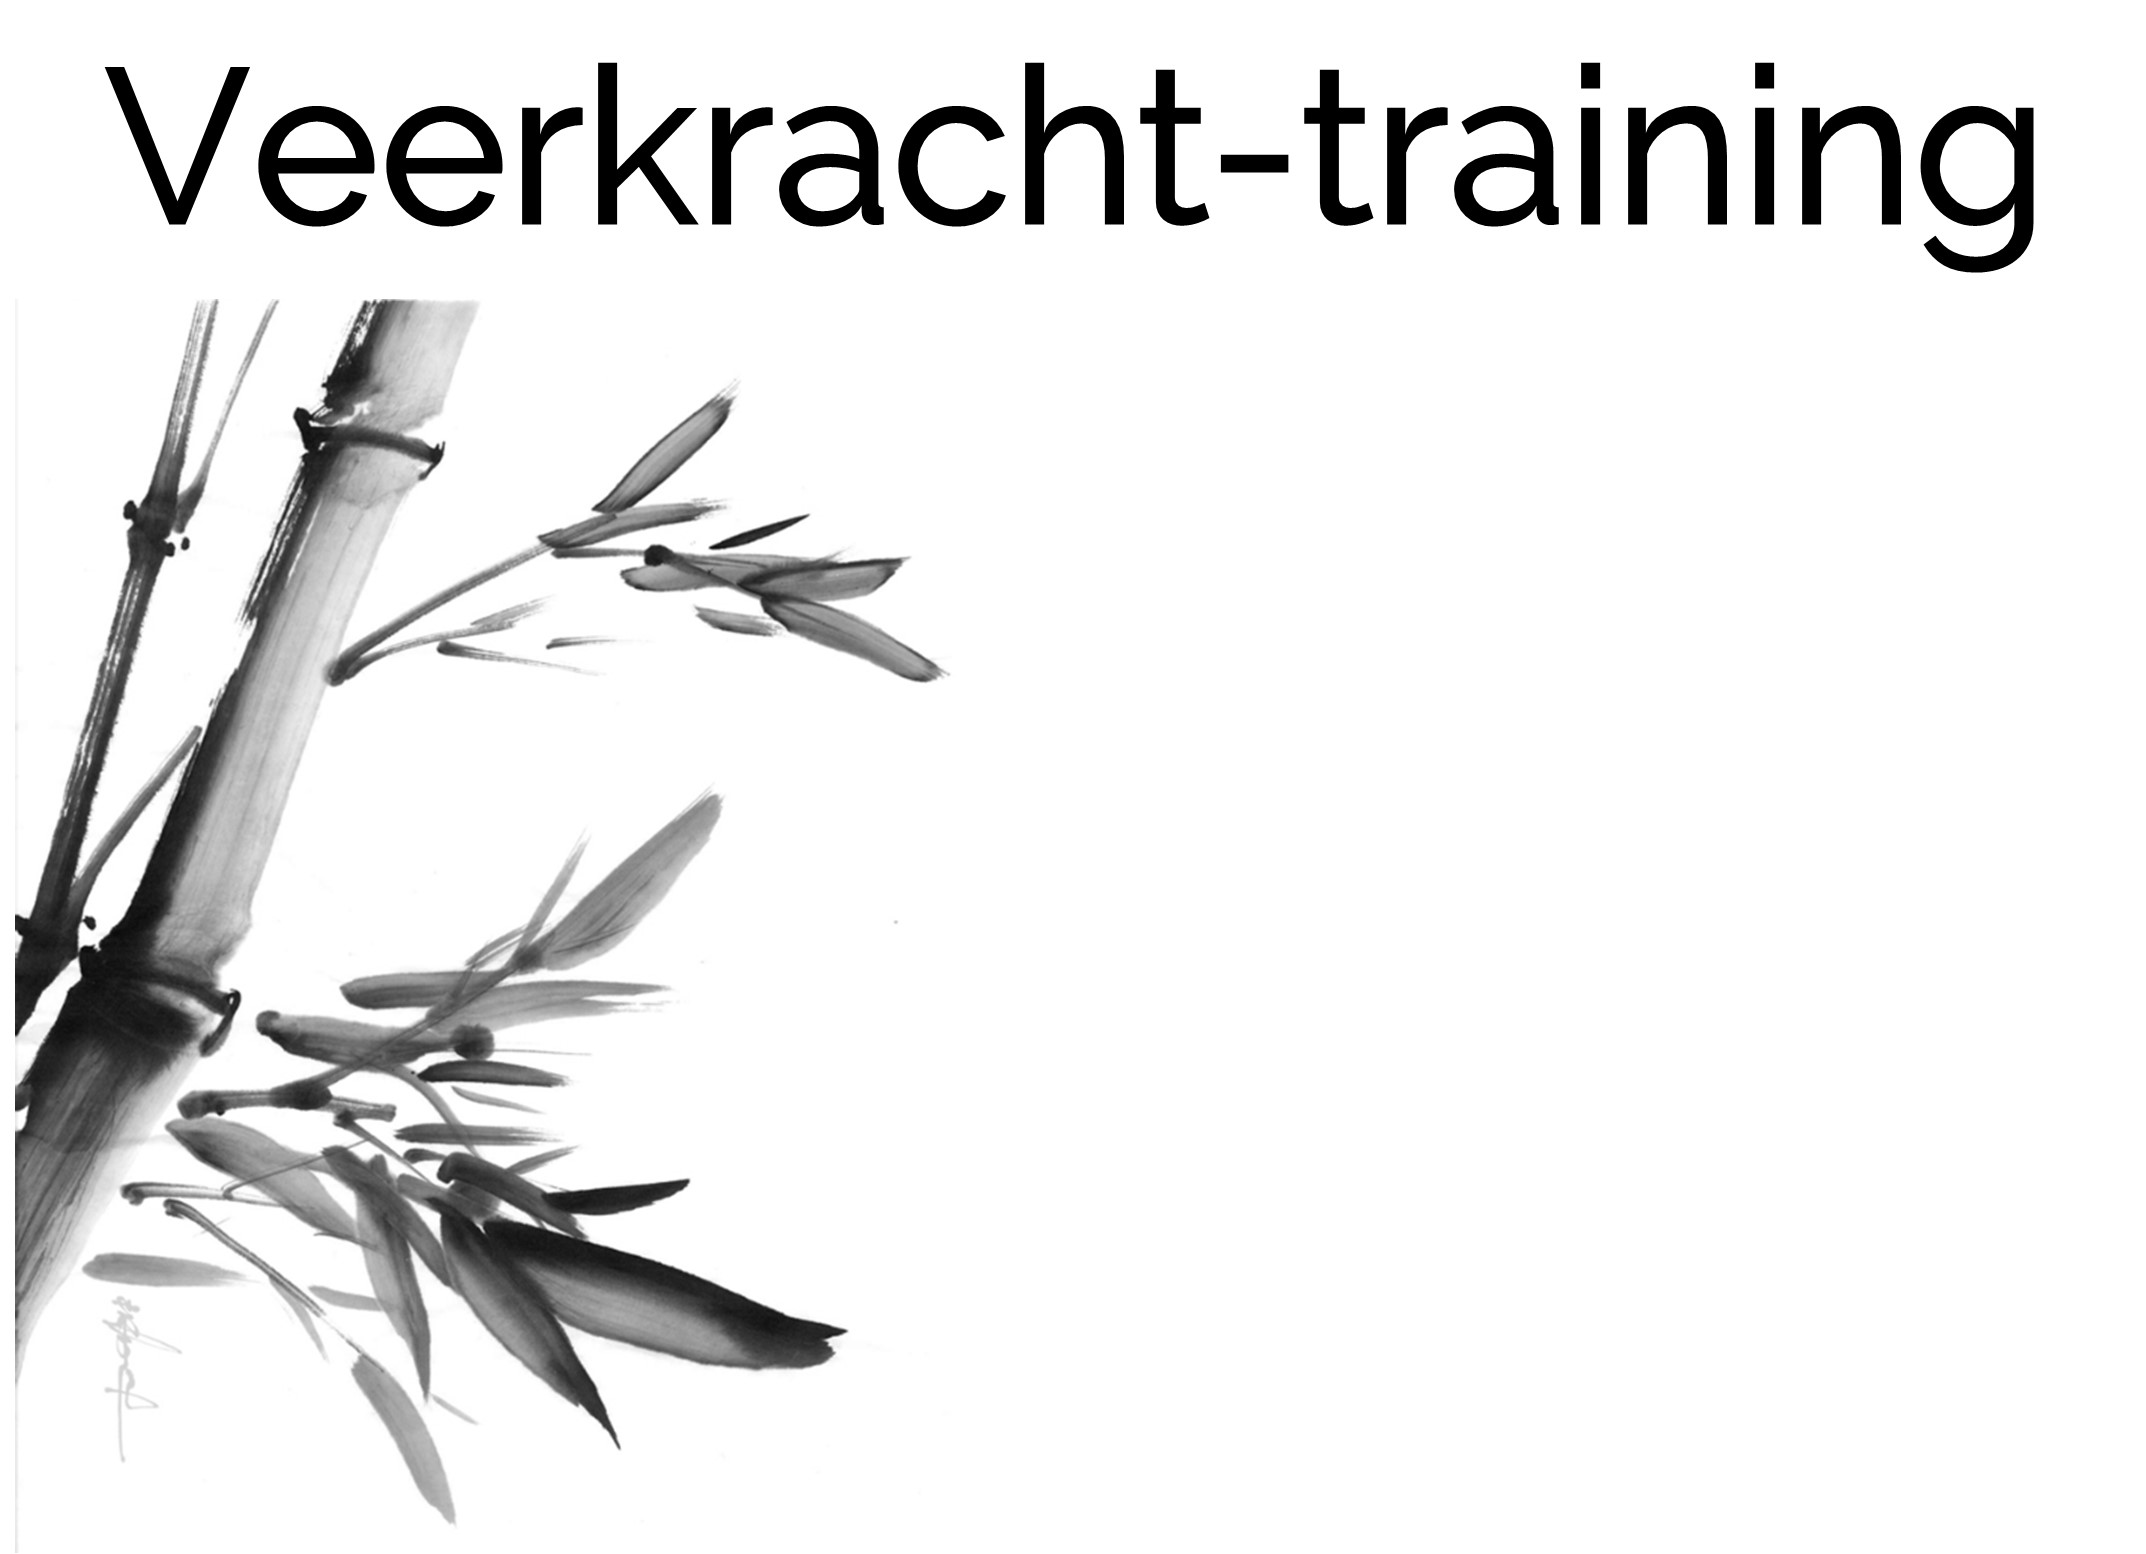 Veerkracht-training Front.jpg